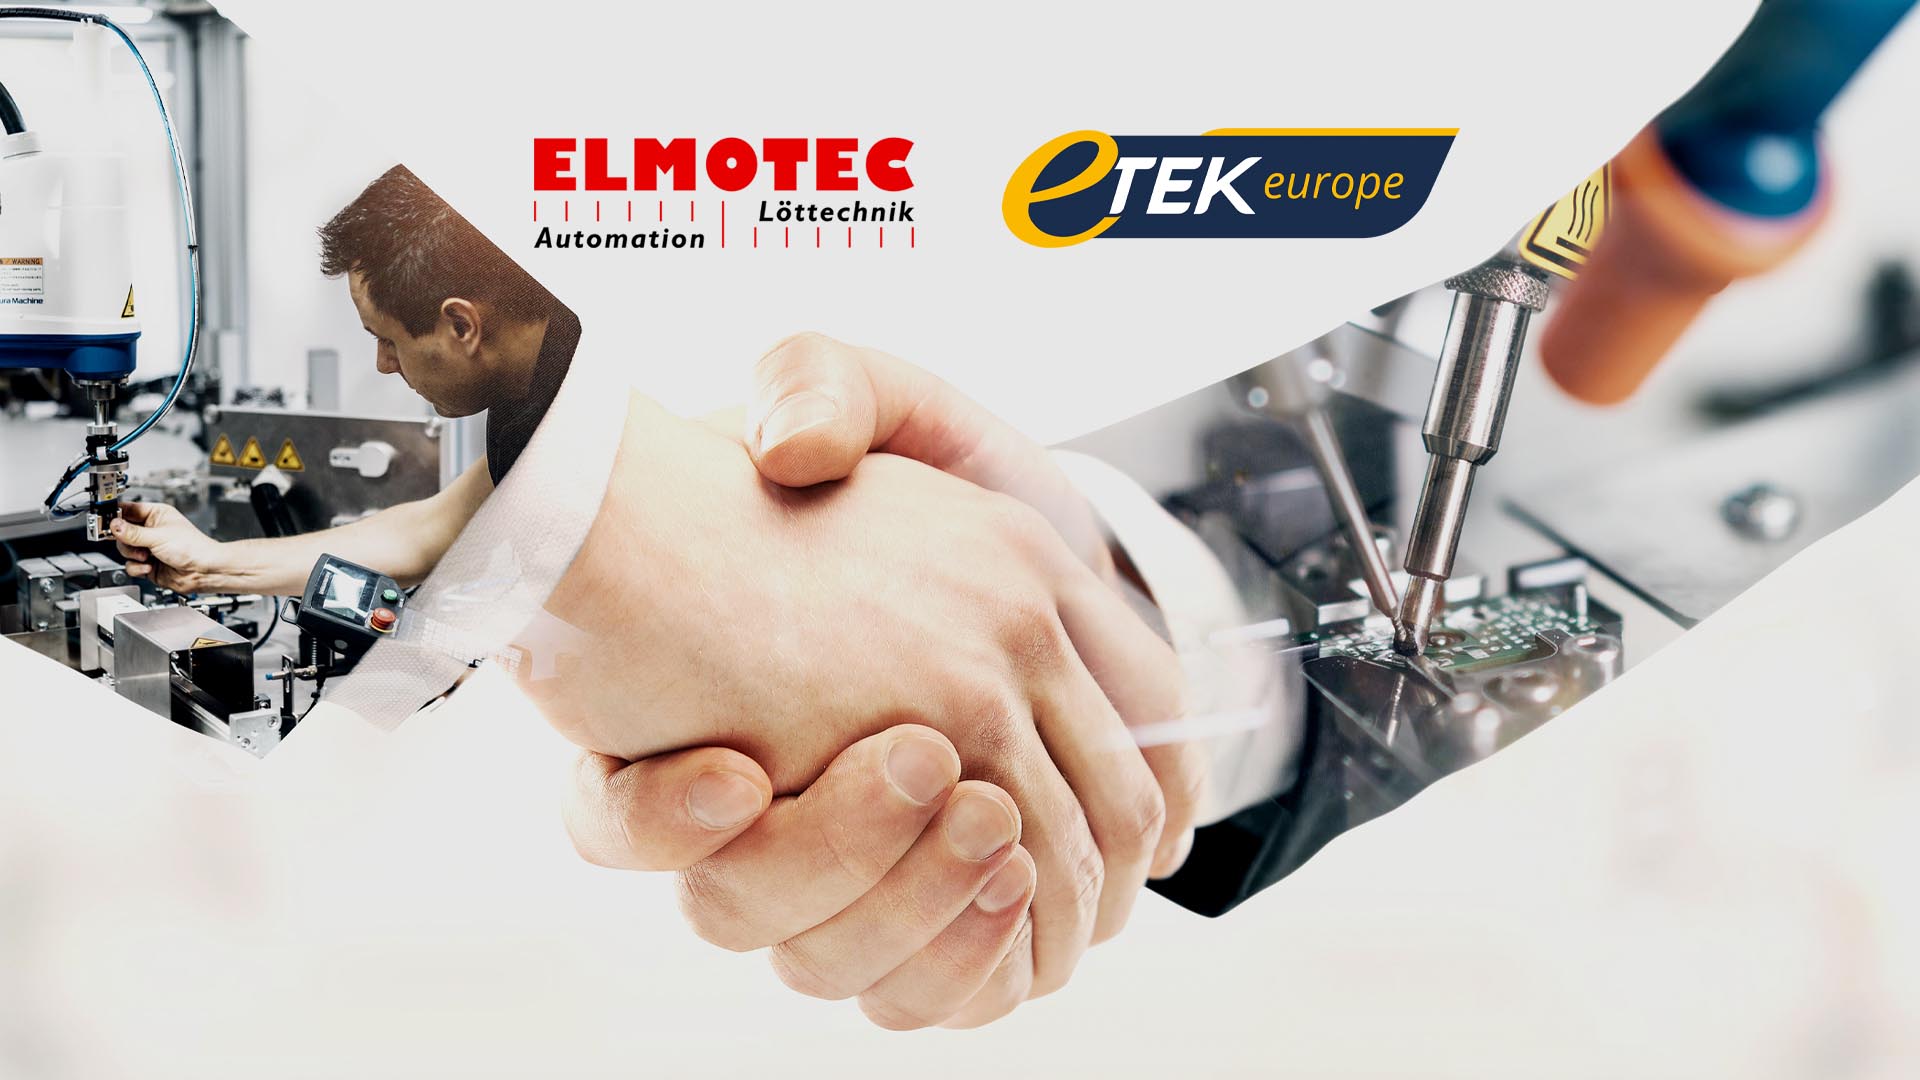 Elmotec and Etek Europe